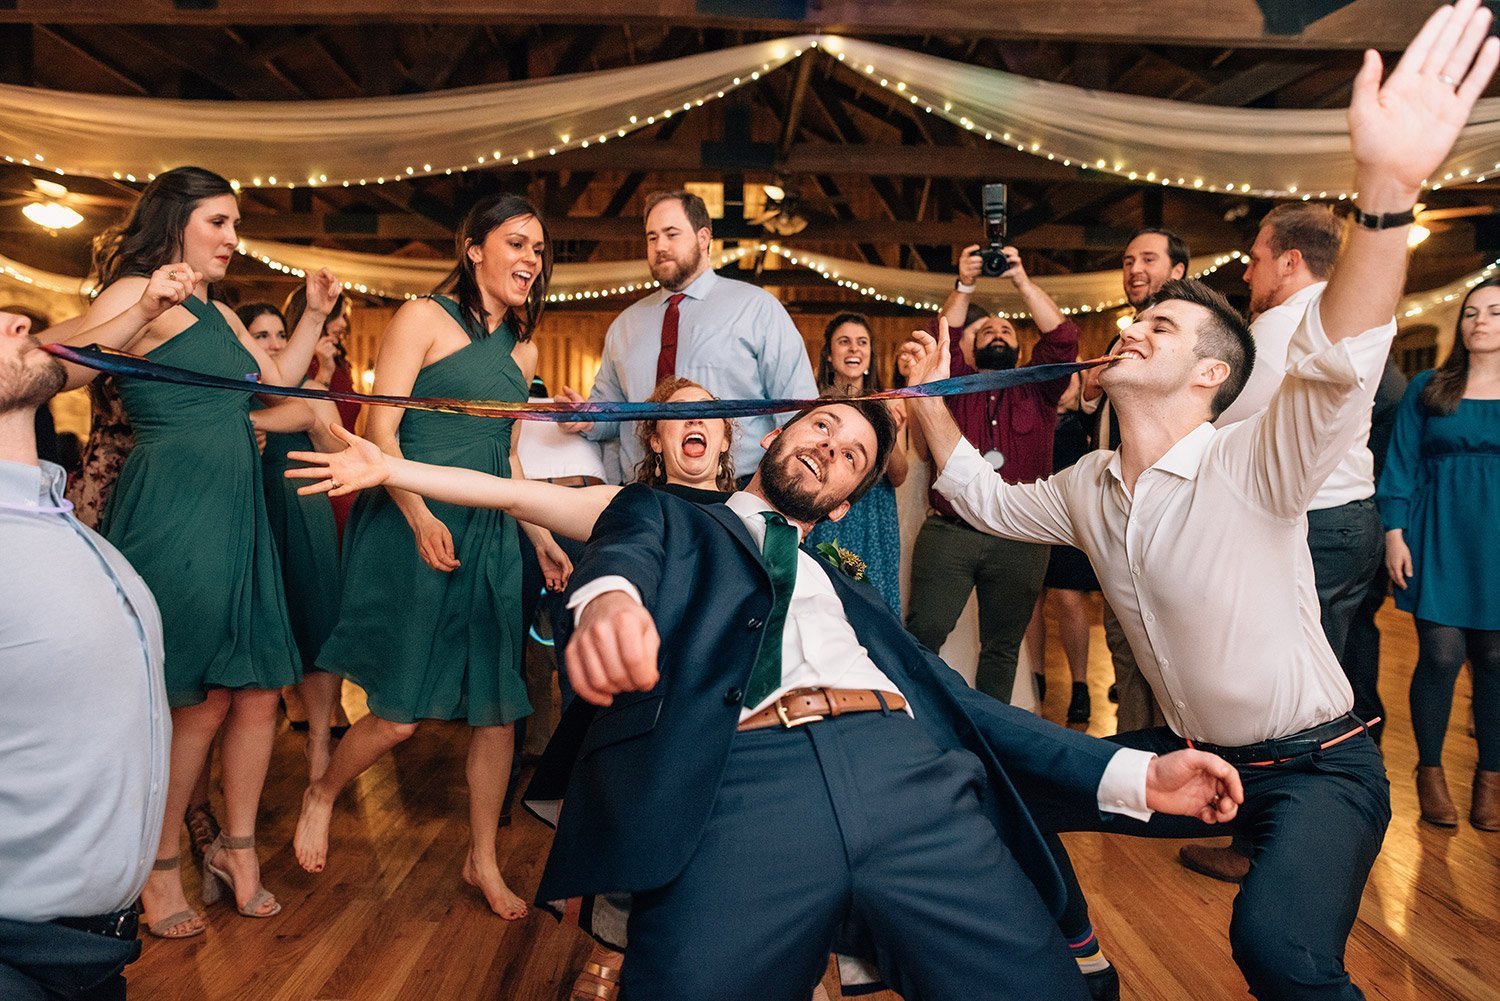 limbo on the dance floor at wedding reception